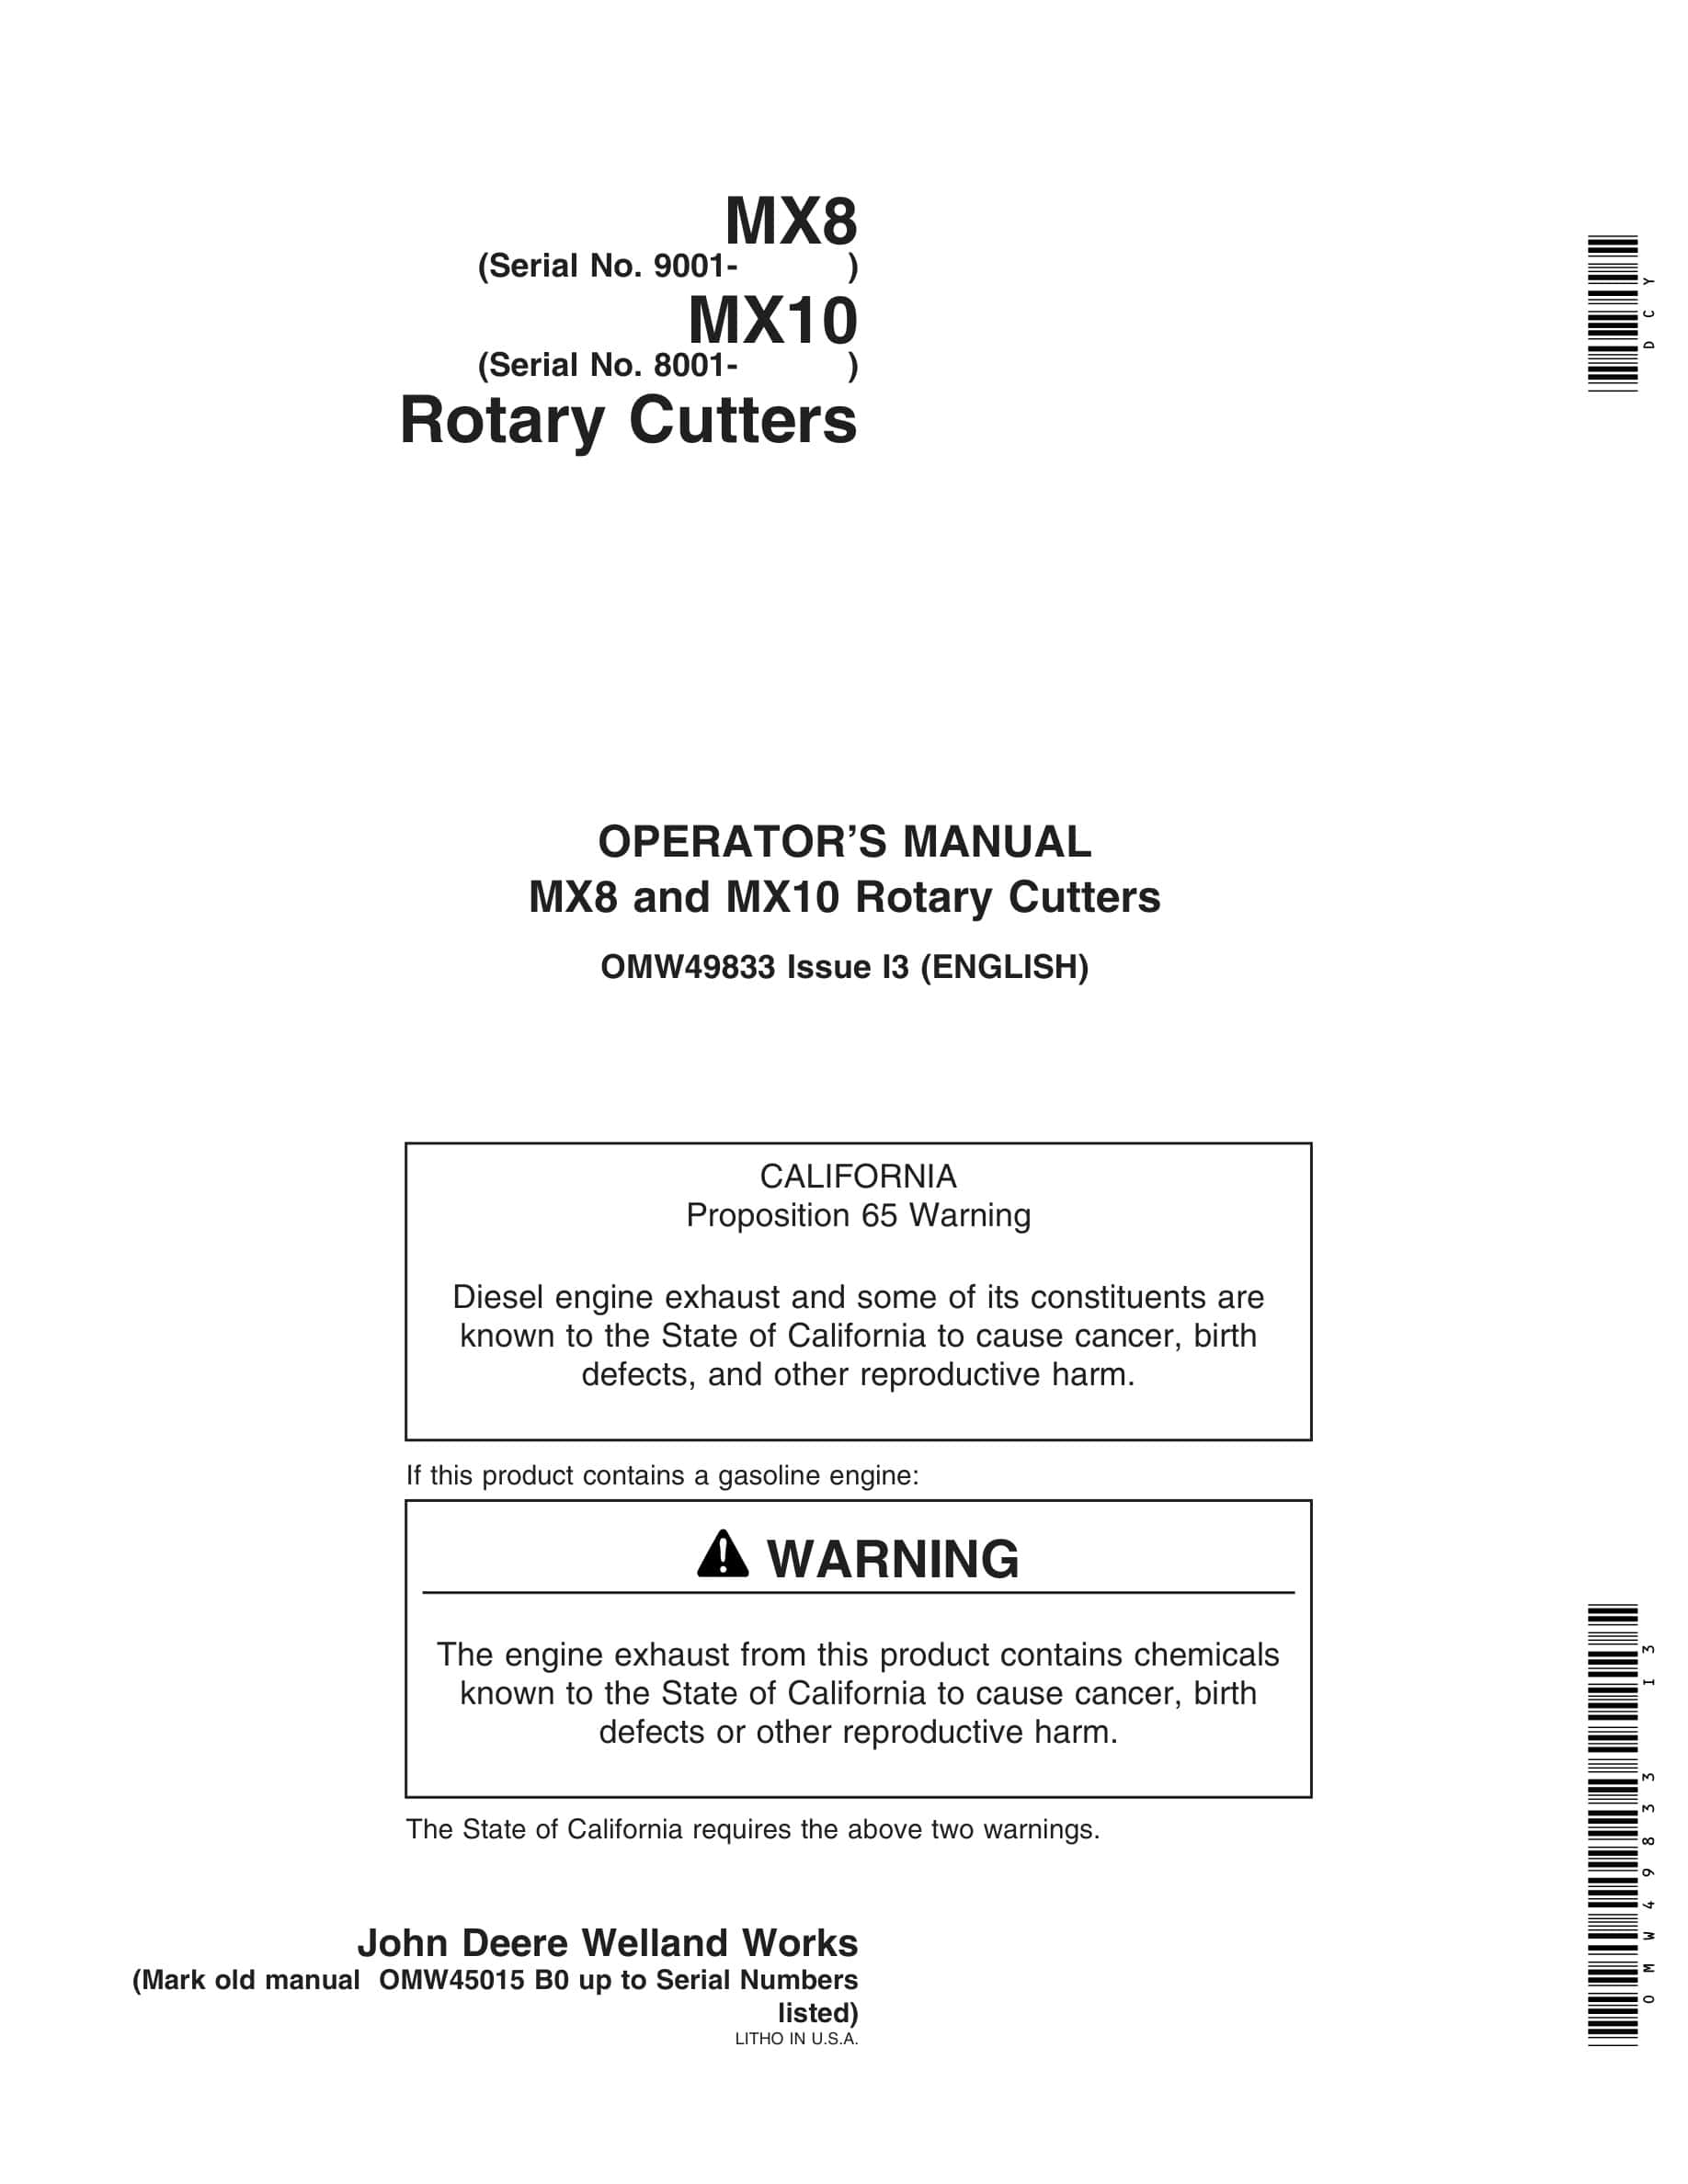 John Deere MX8 and MX10 Rotary Cutter Operator Manual OMW49833-1